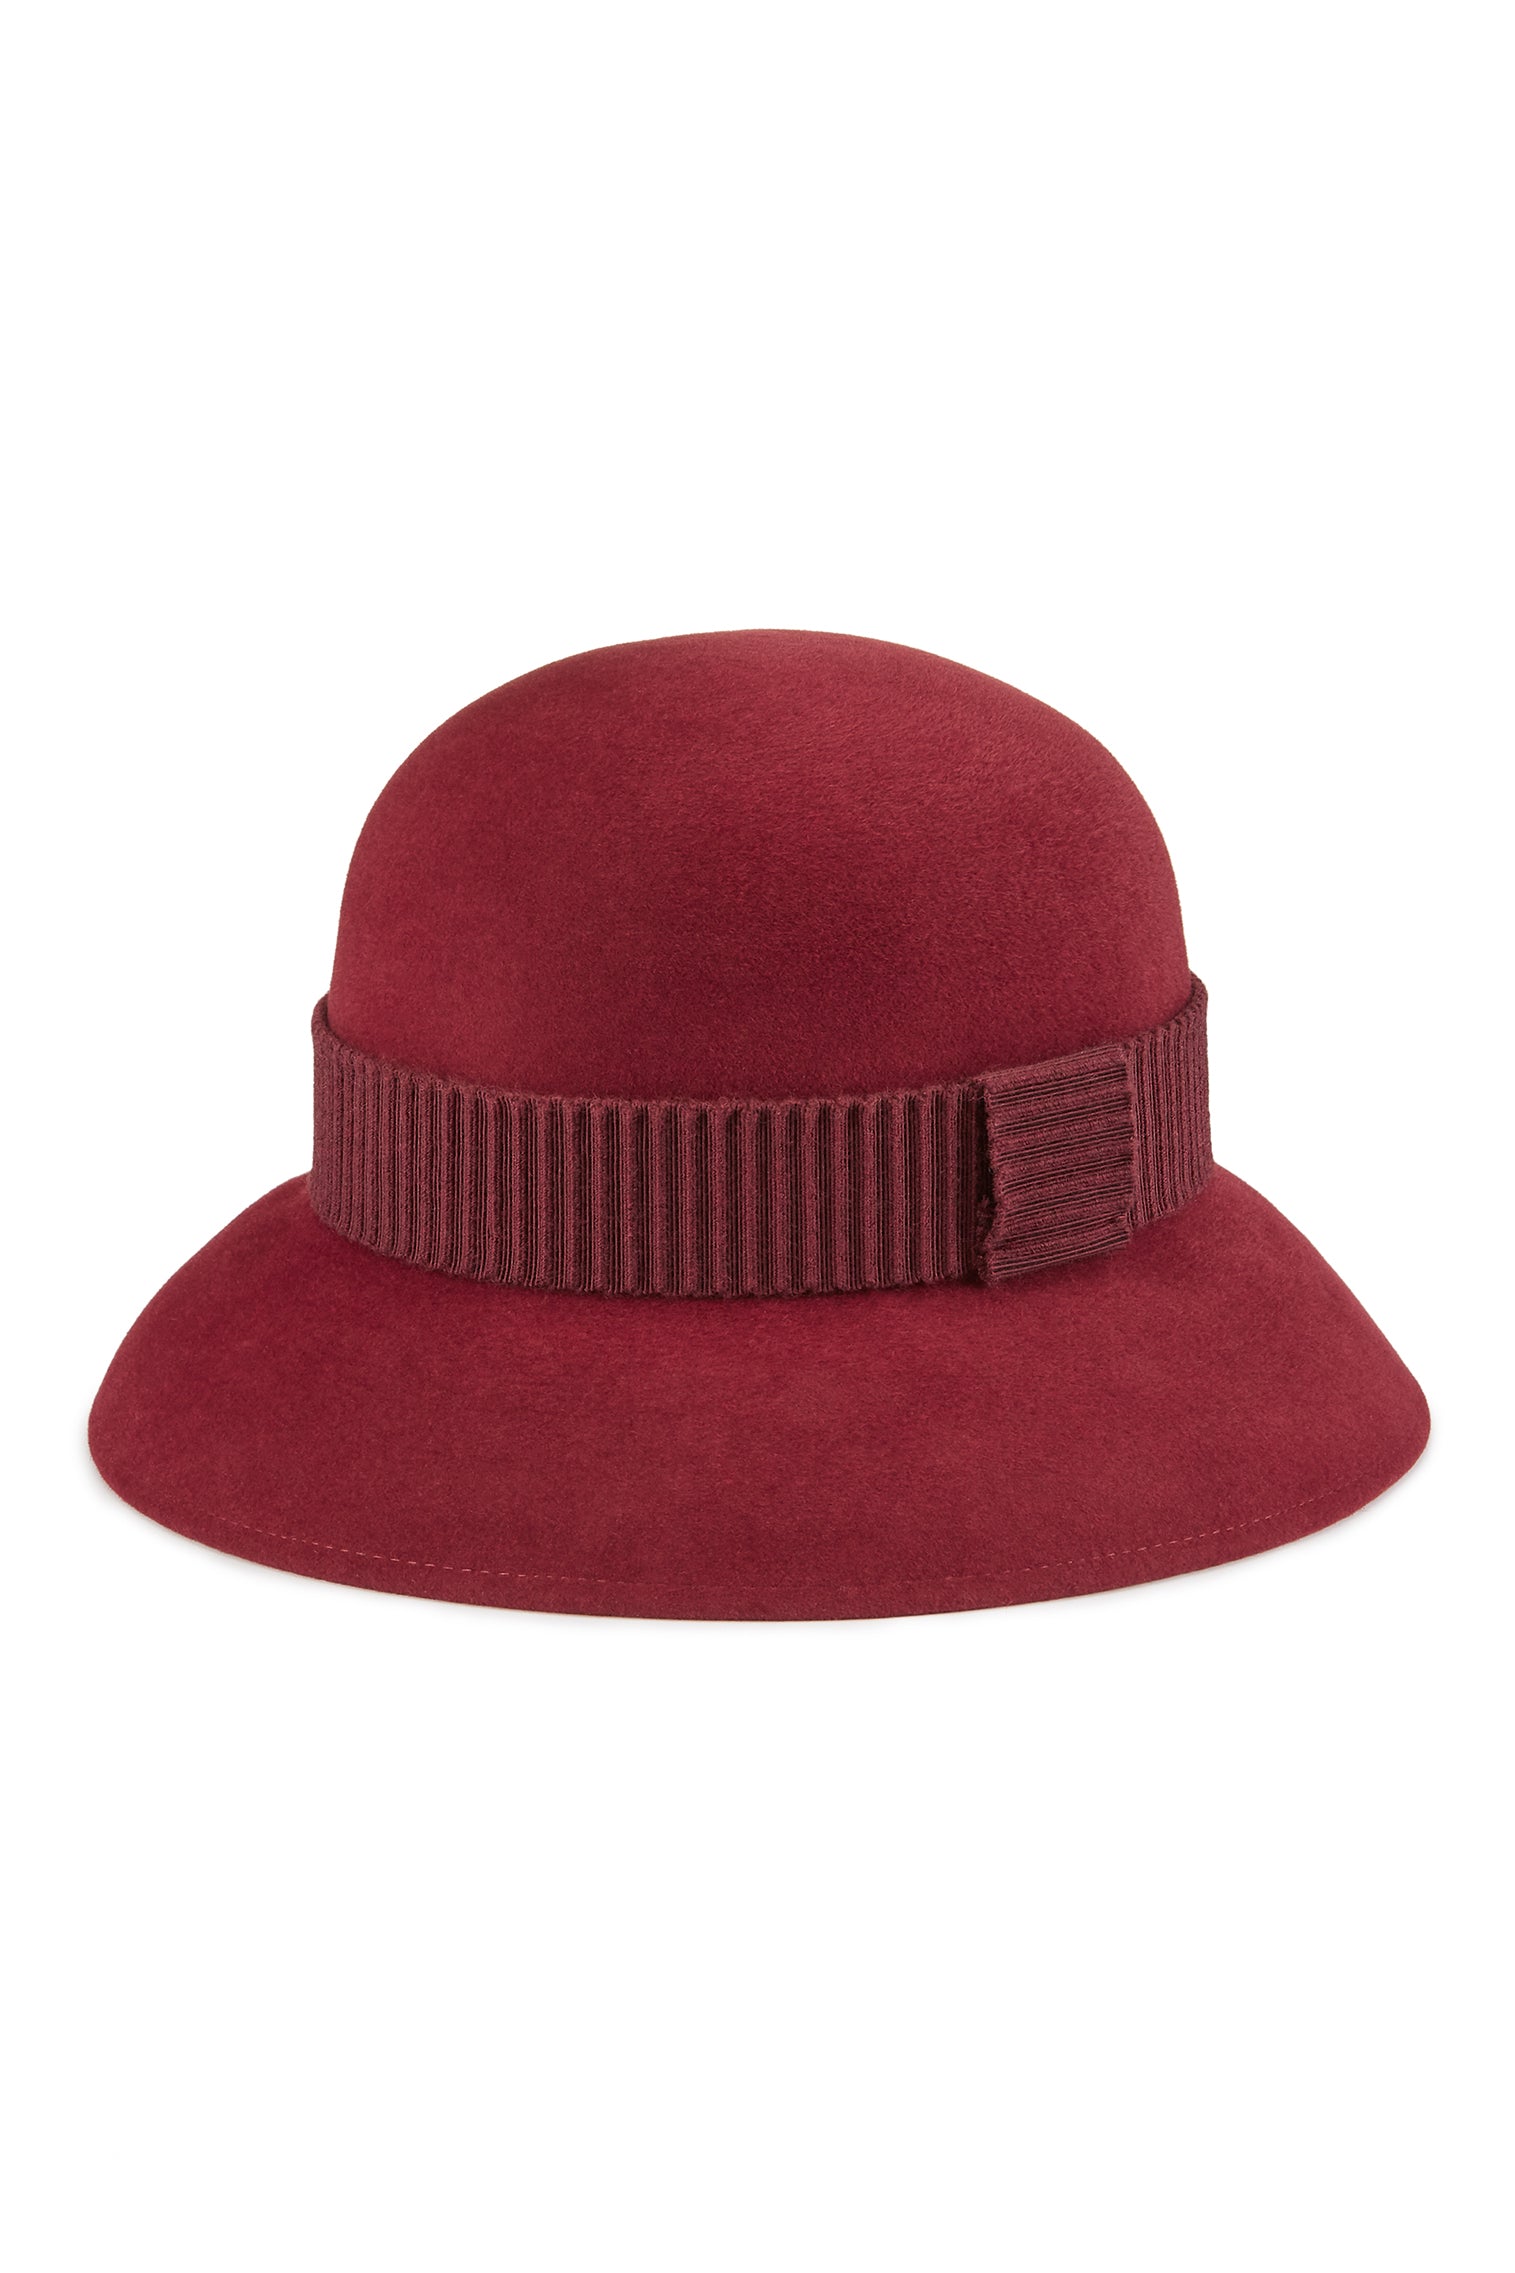 Hogarth Cloche - Black Hats & Headpieces for Women - Lock & Co. Hatters London UK